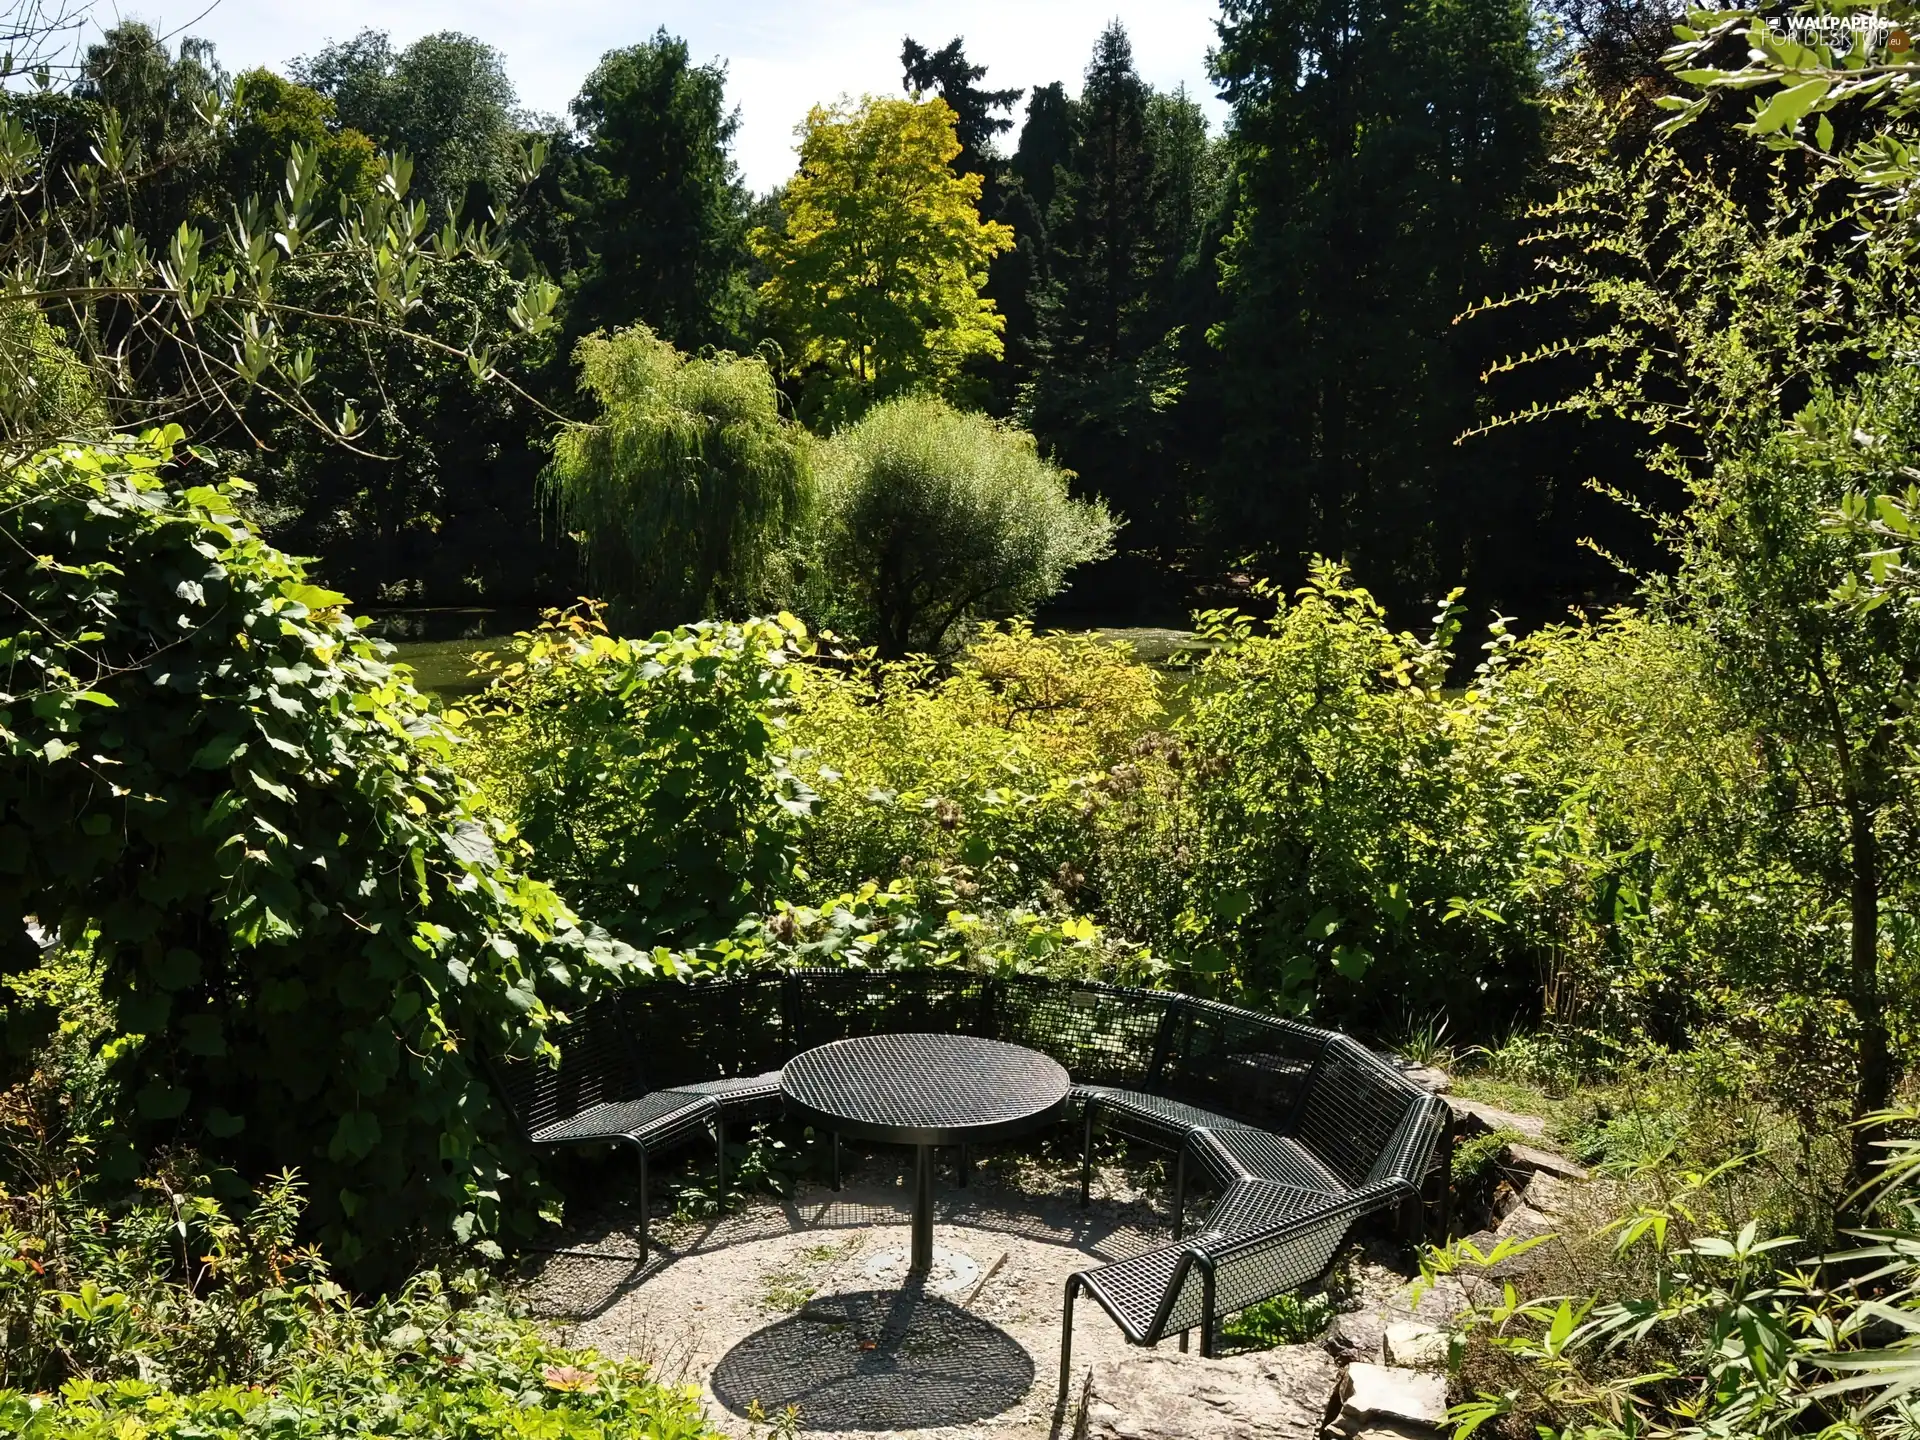 Garden, Bench, relaxation, green